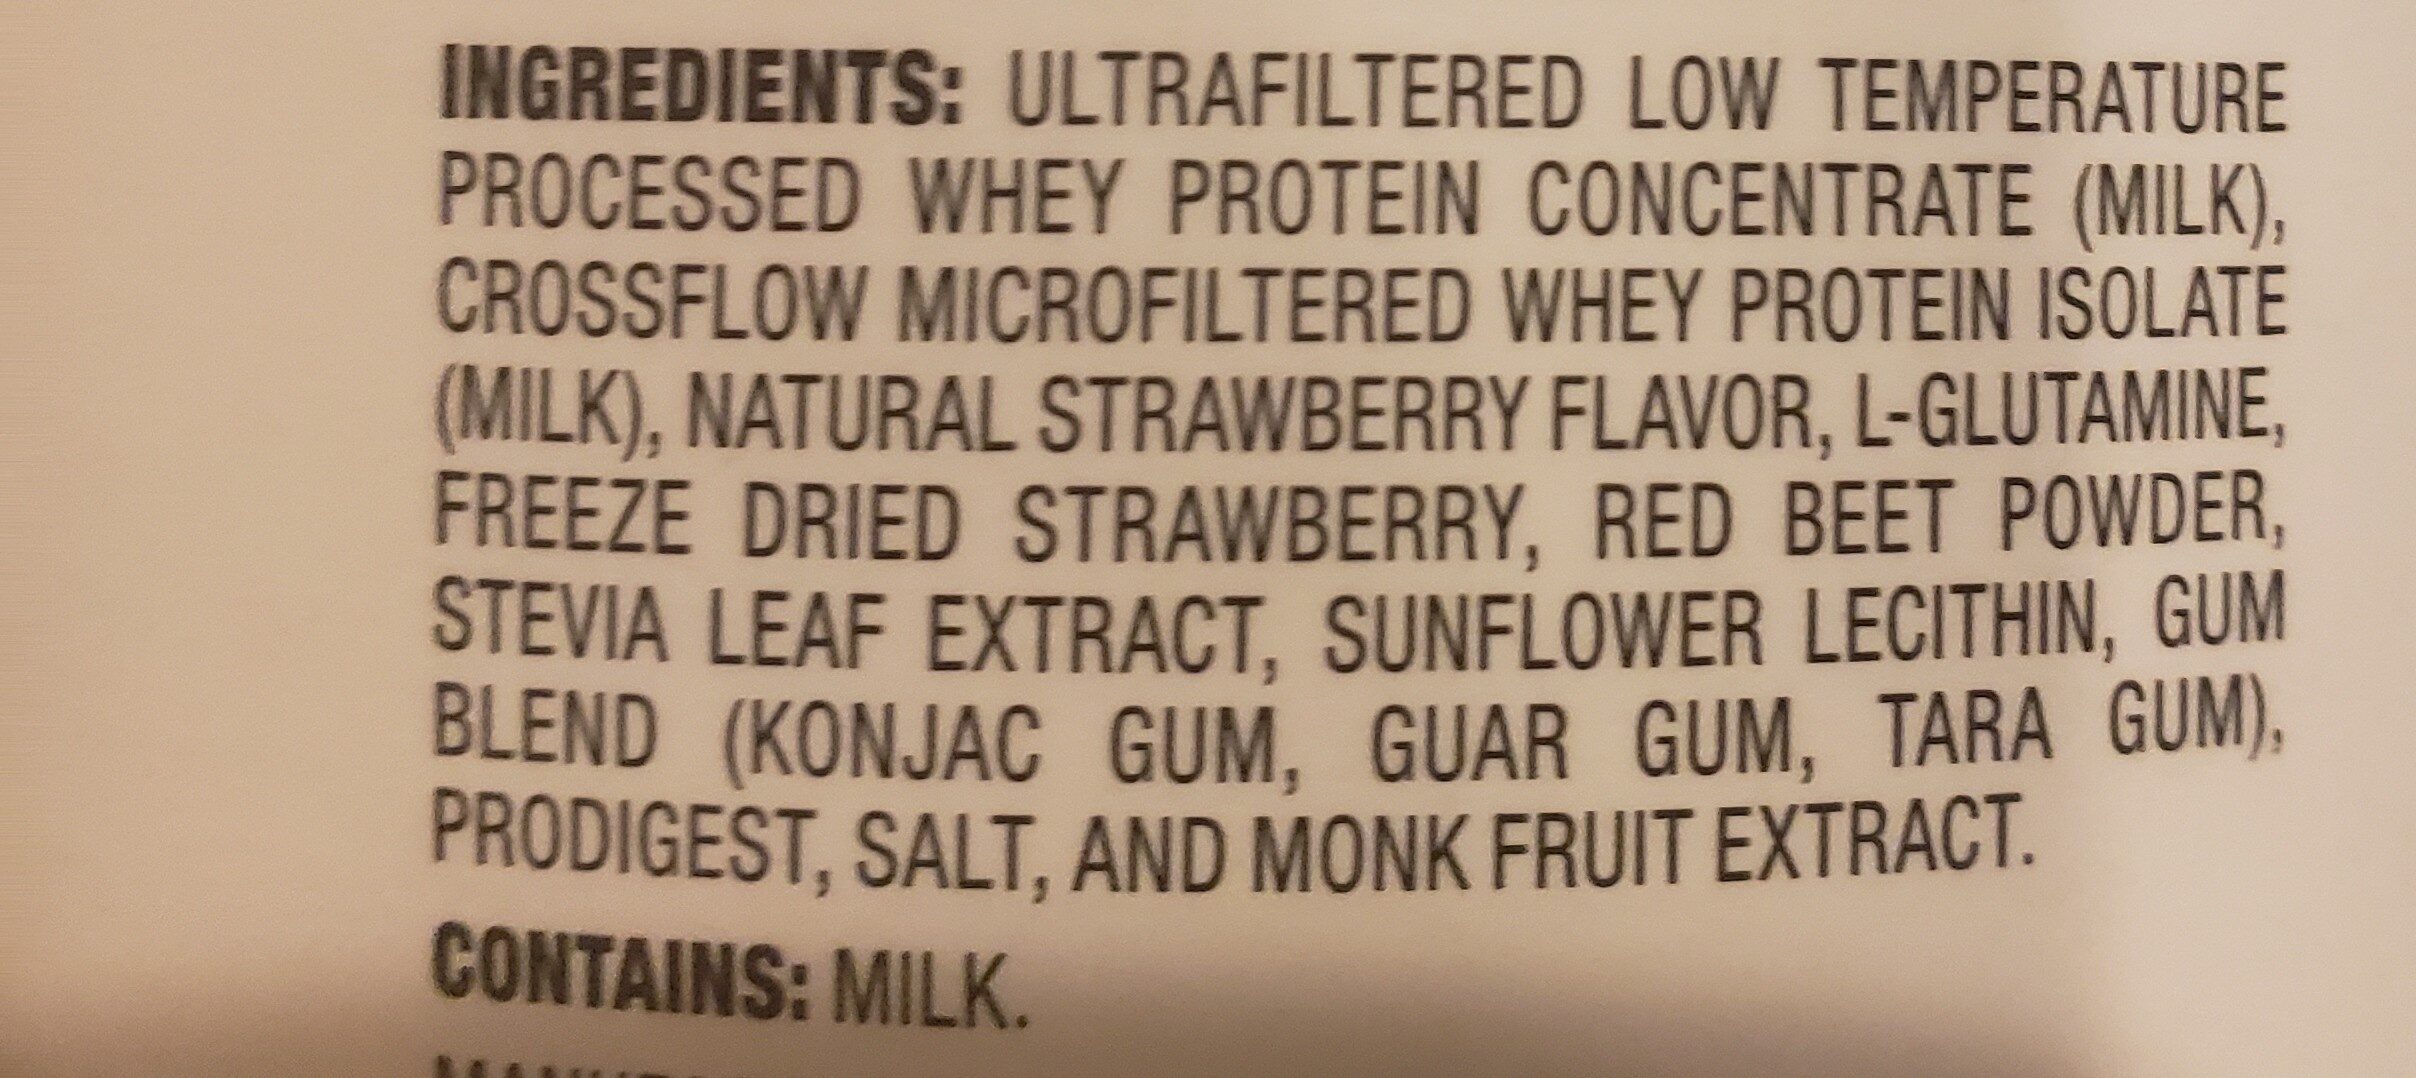 Whey Protein - Ingredients